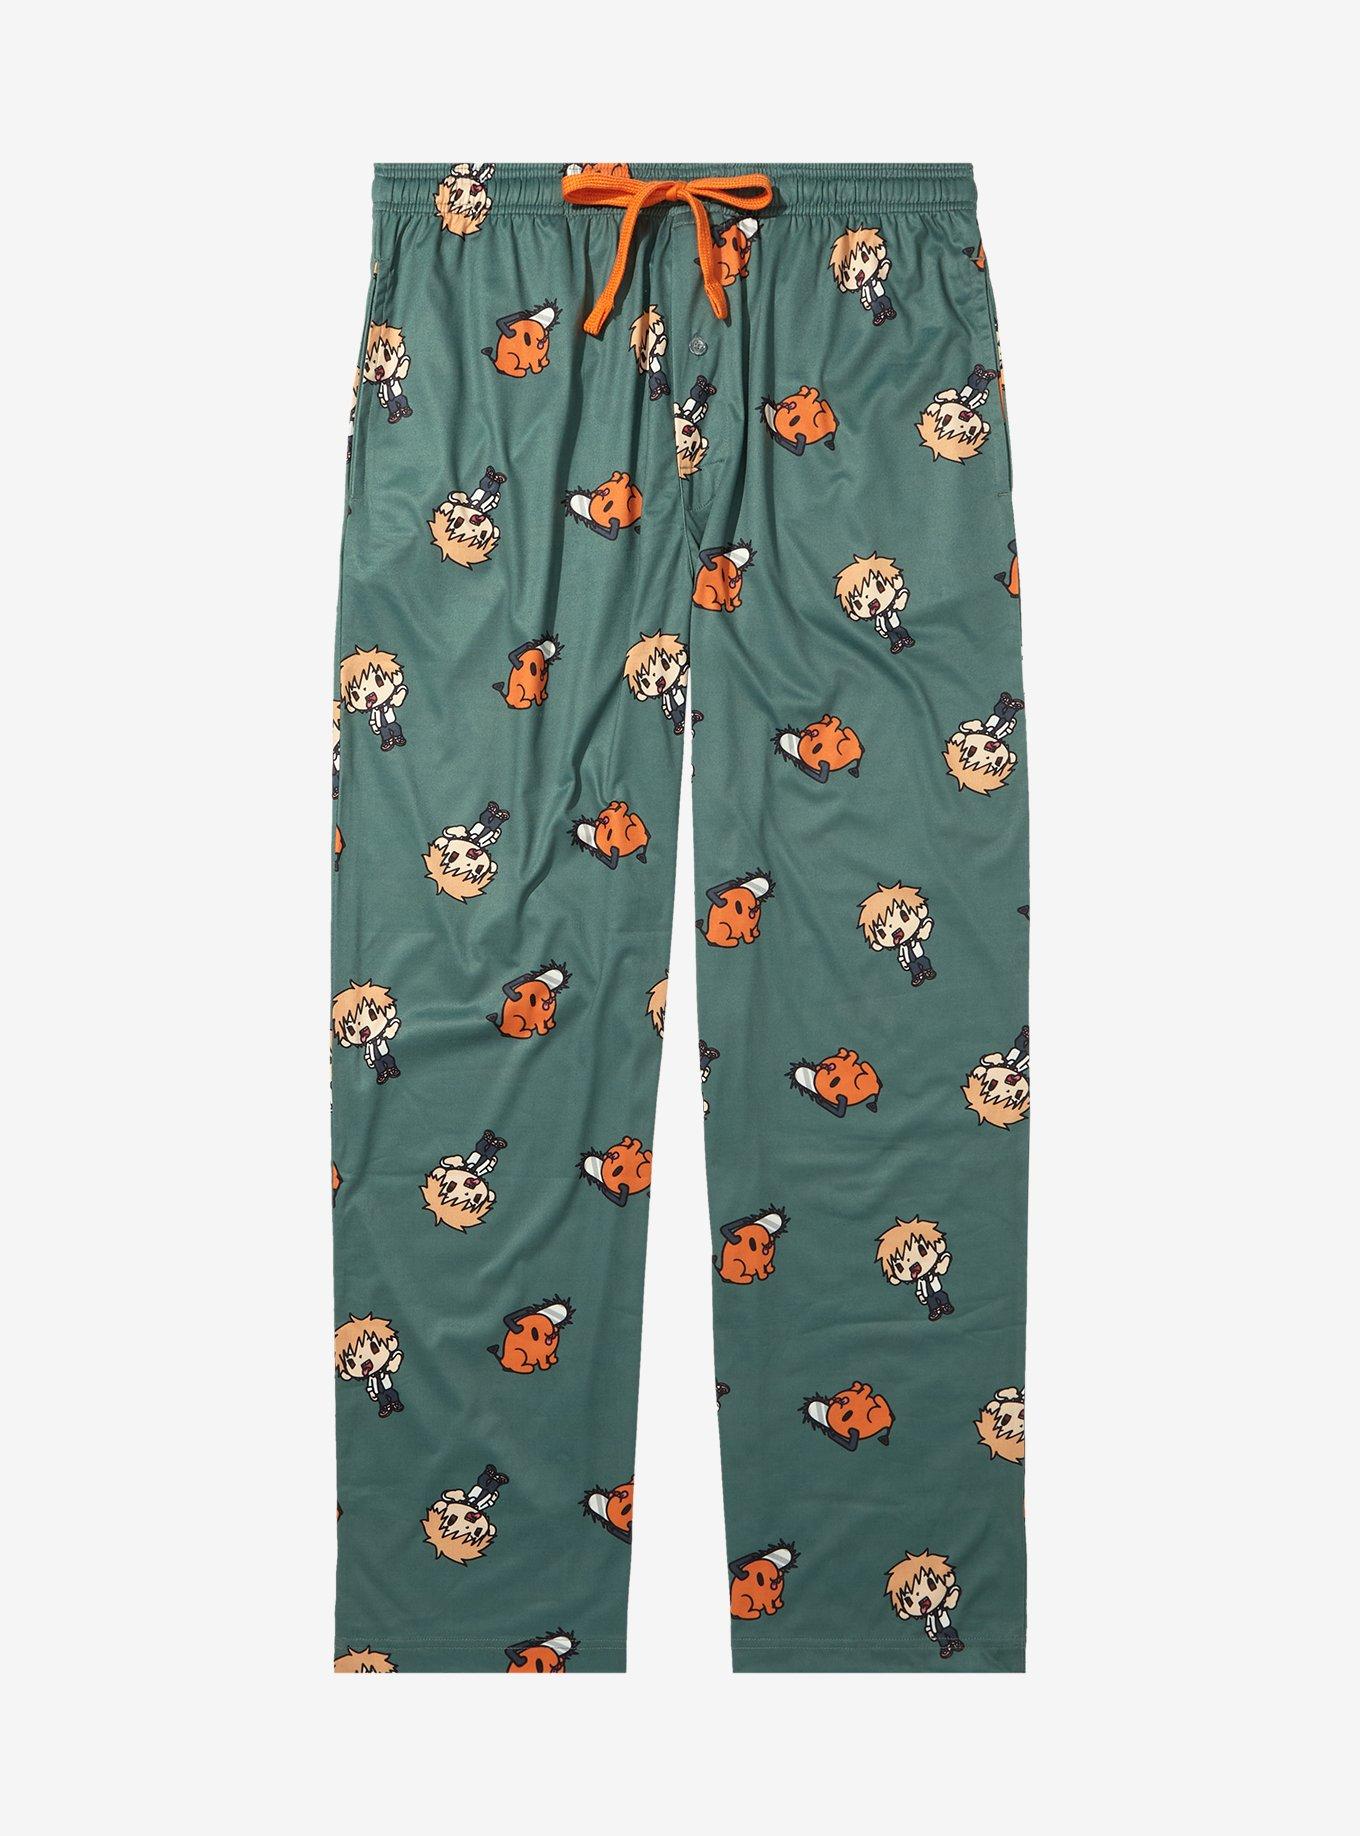 Pajama Pants Lounge Pants Sweat Pants Cute Frog Cute Pajamas